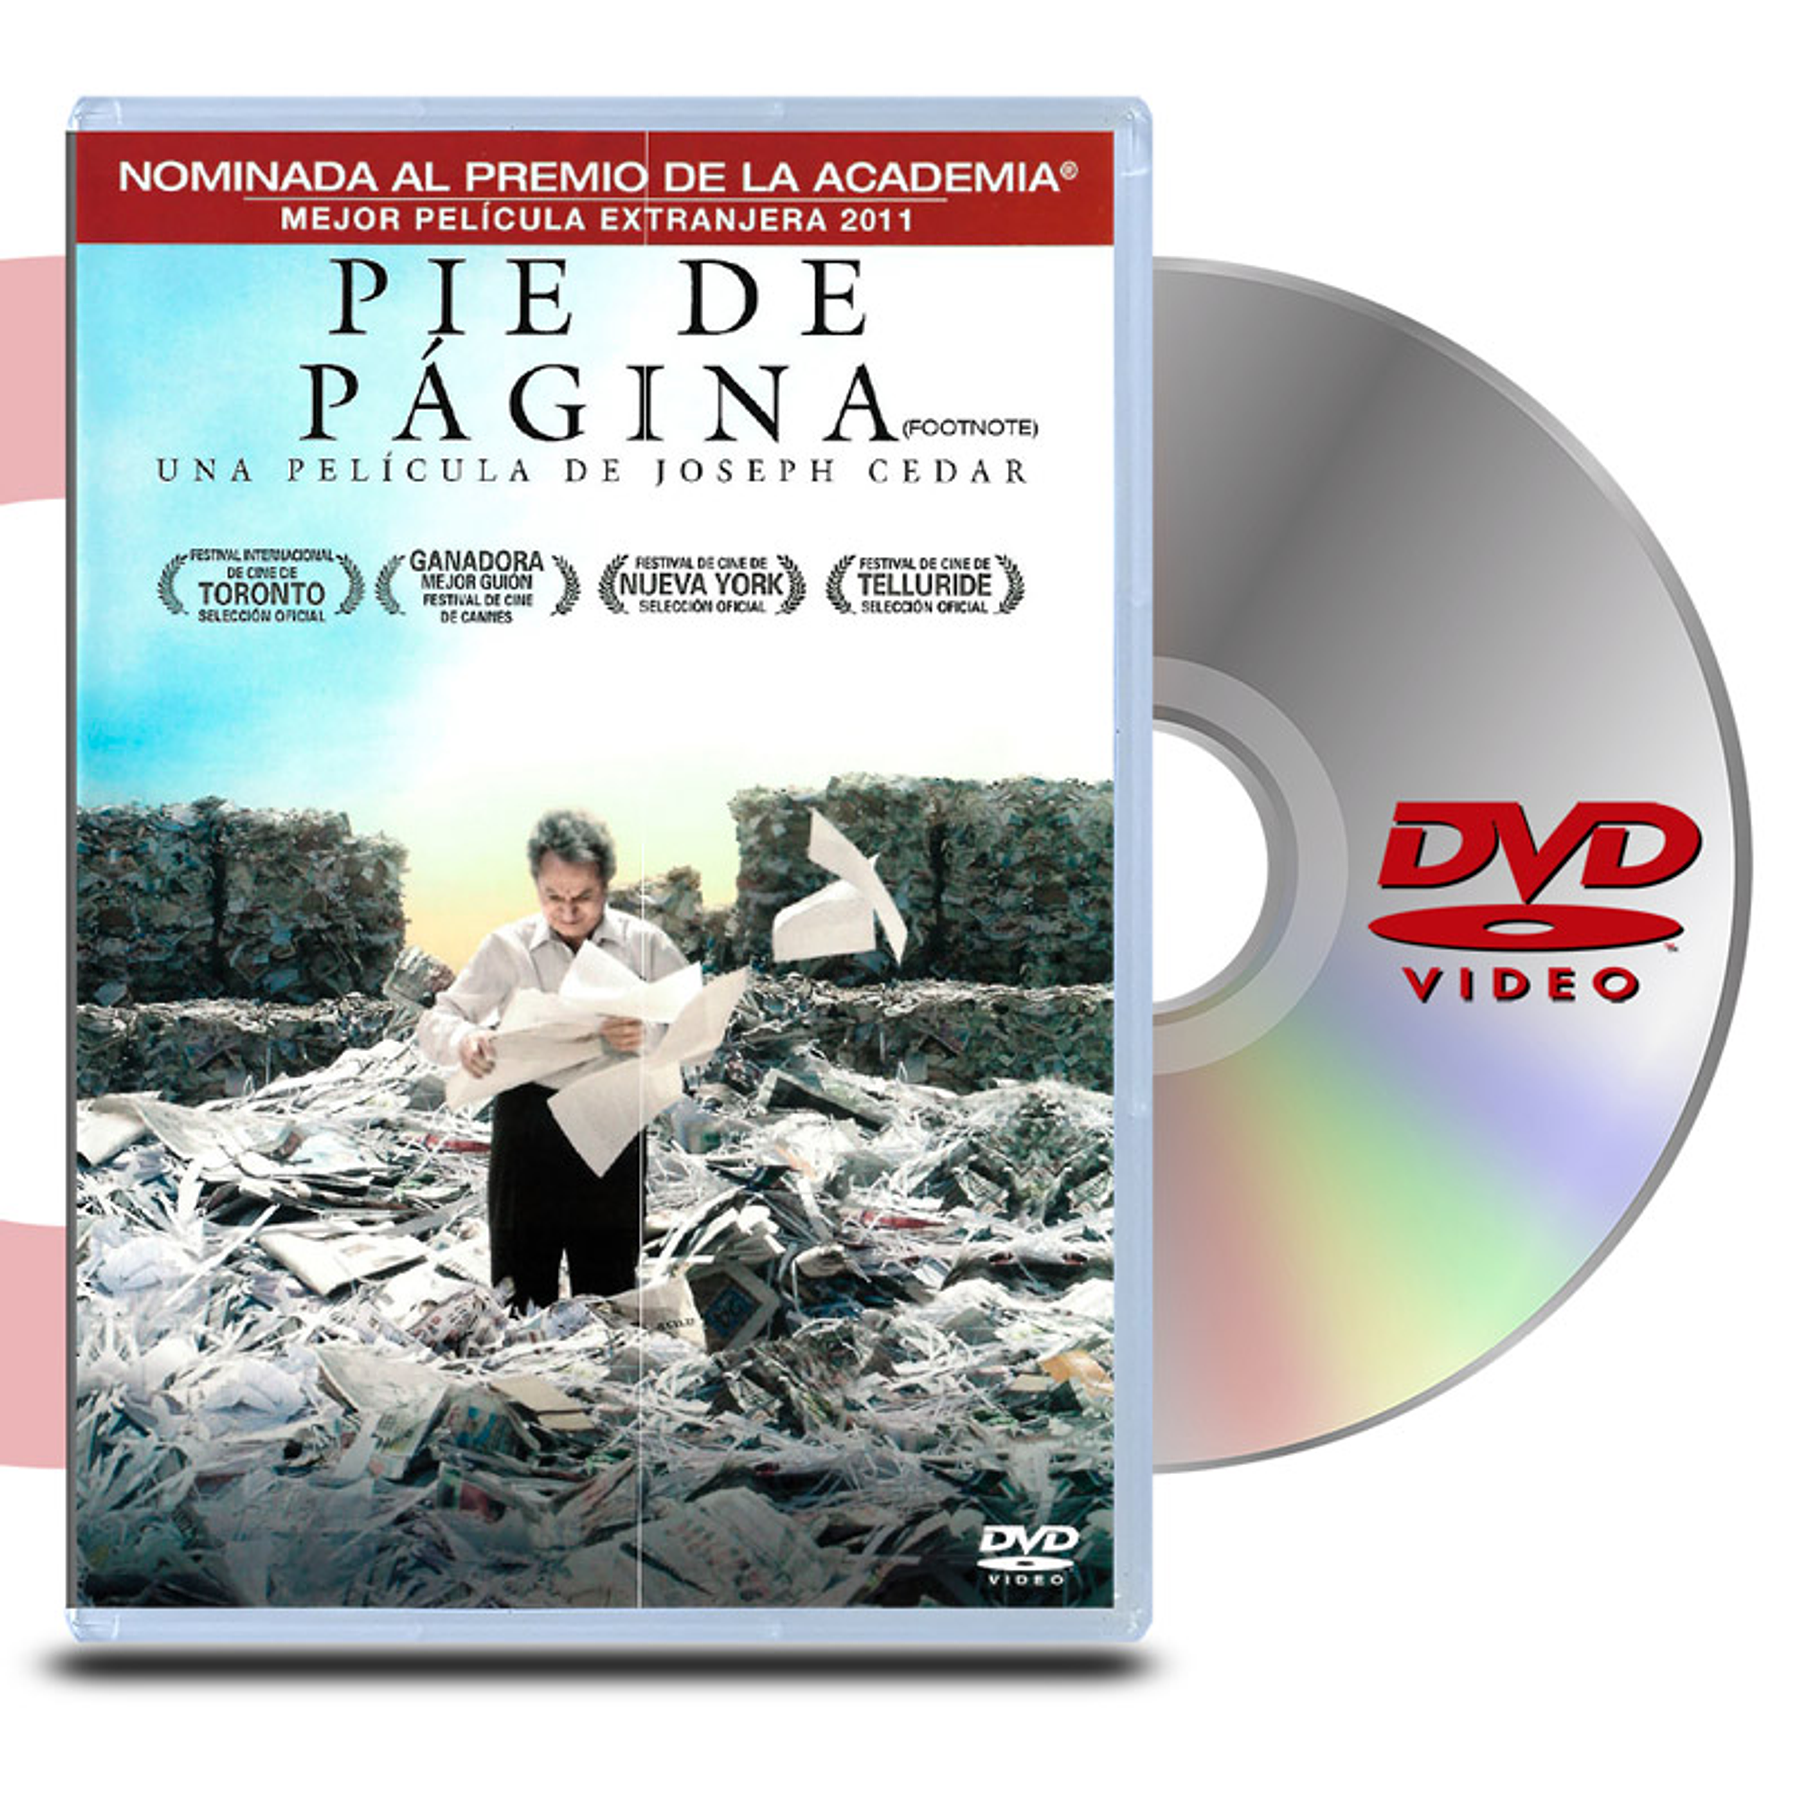 DVD PIE DE PAGINA